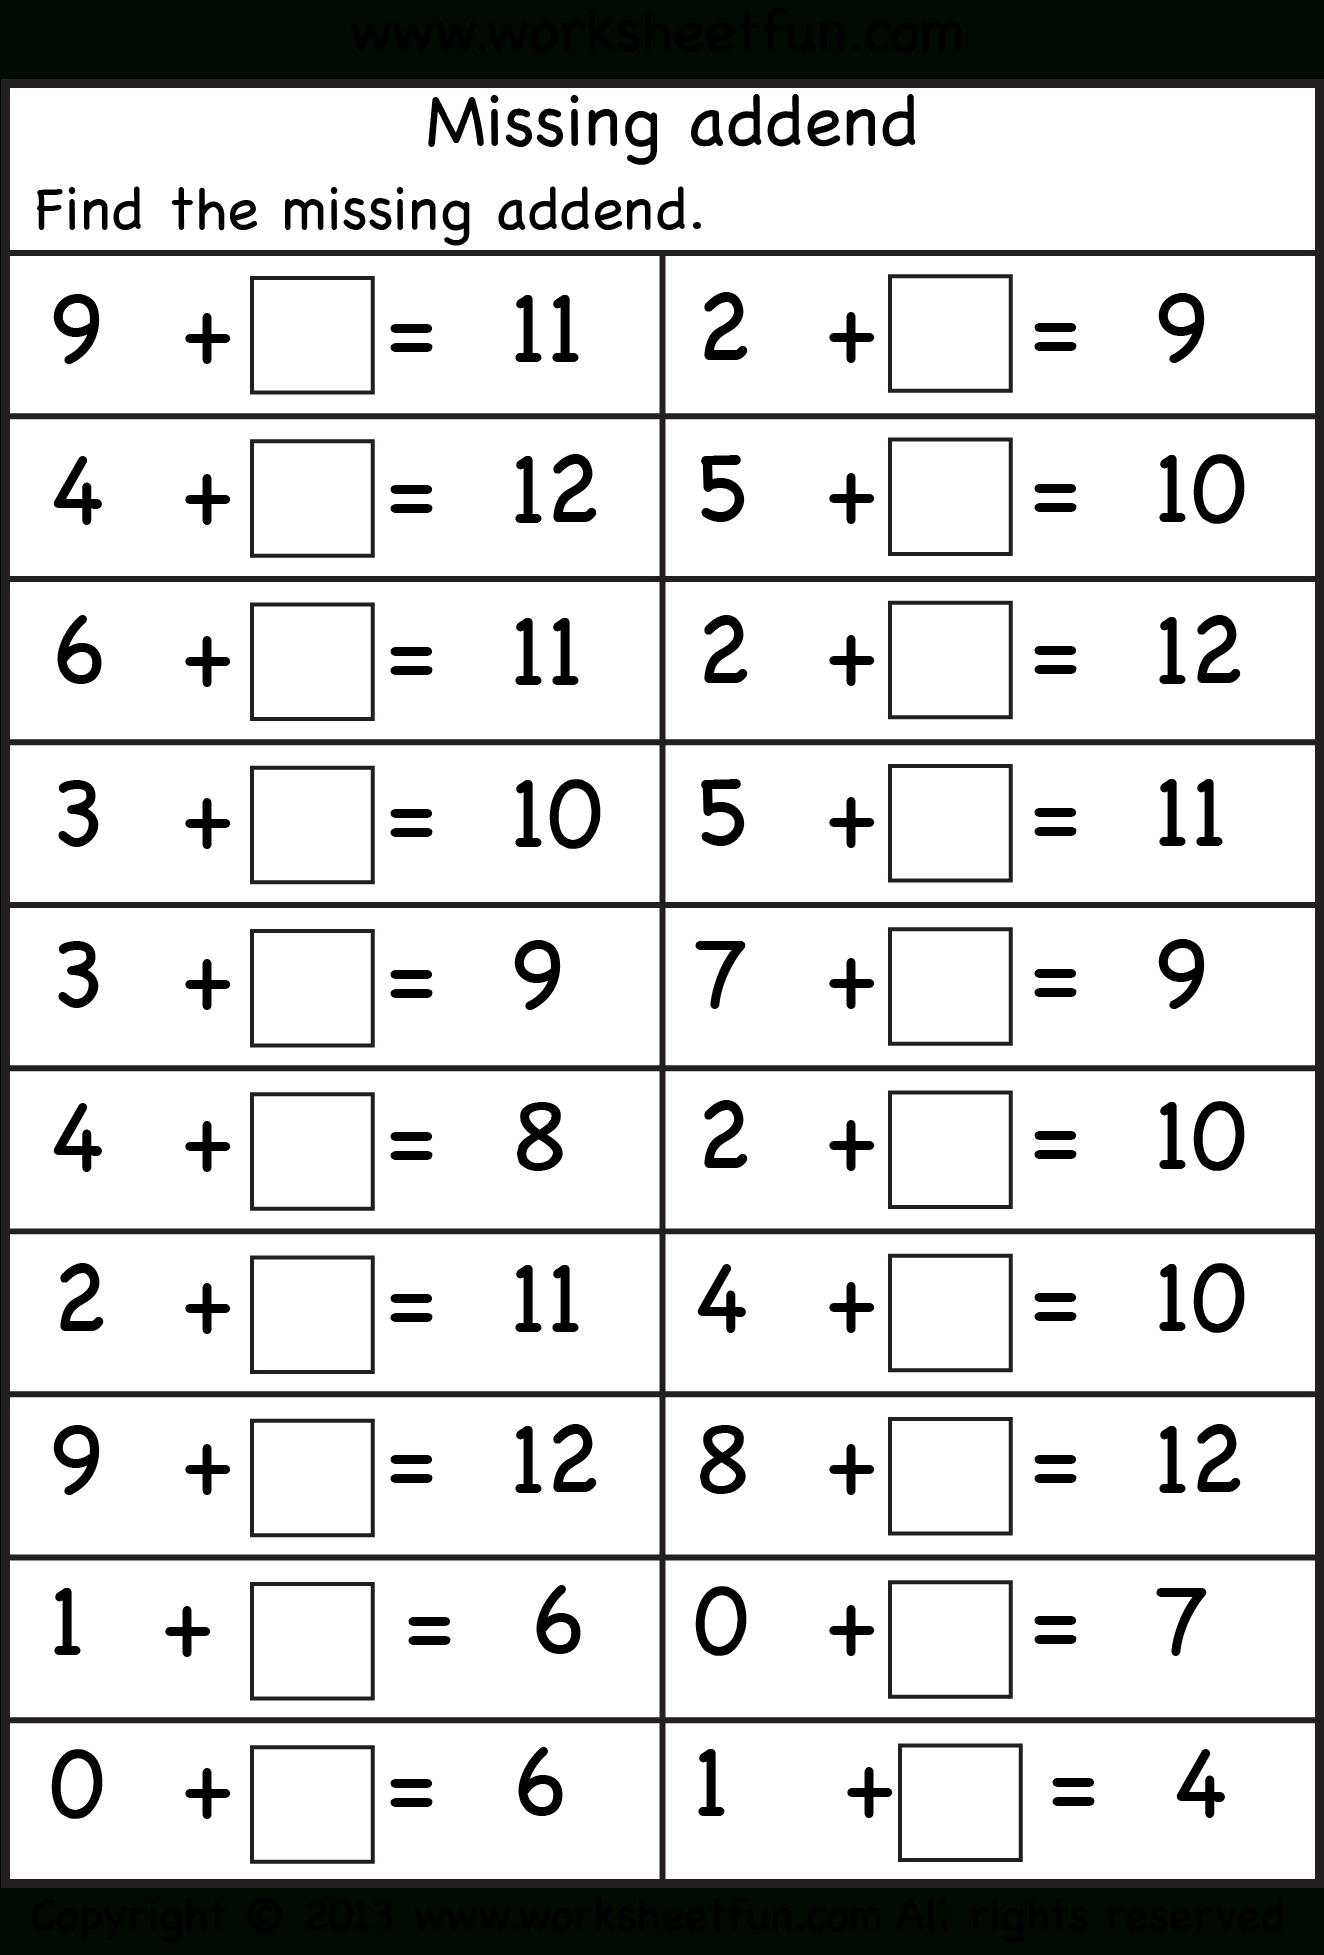 Missingaddend2 1,324×1,955 Pixels | Math Worksheets in Hebrew Calendar Worksheets And How To Make One